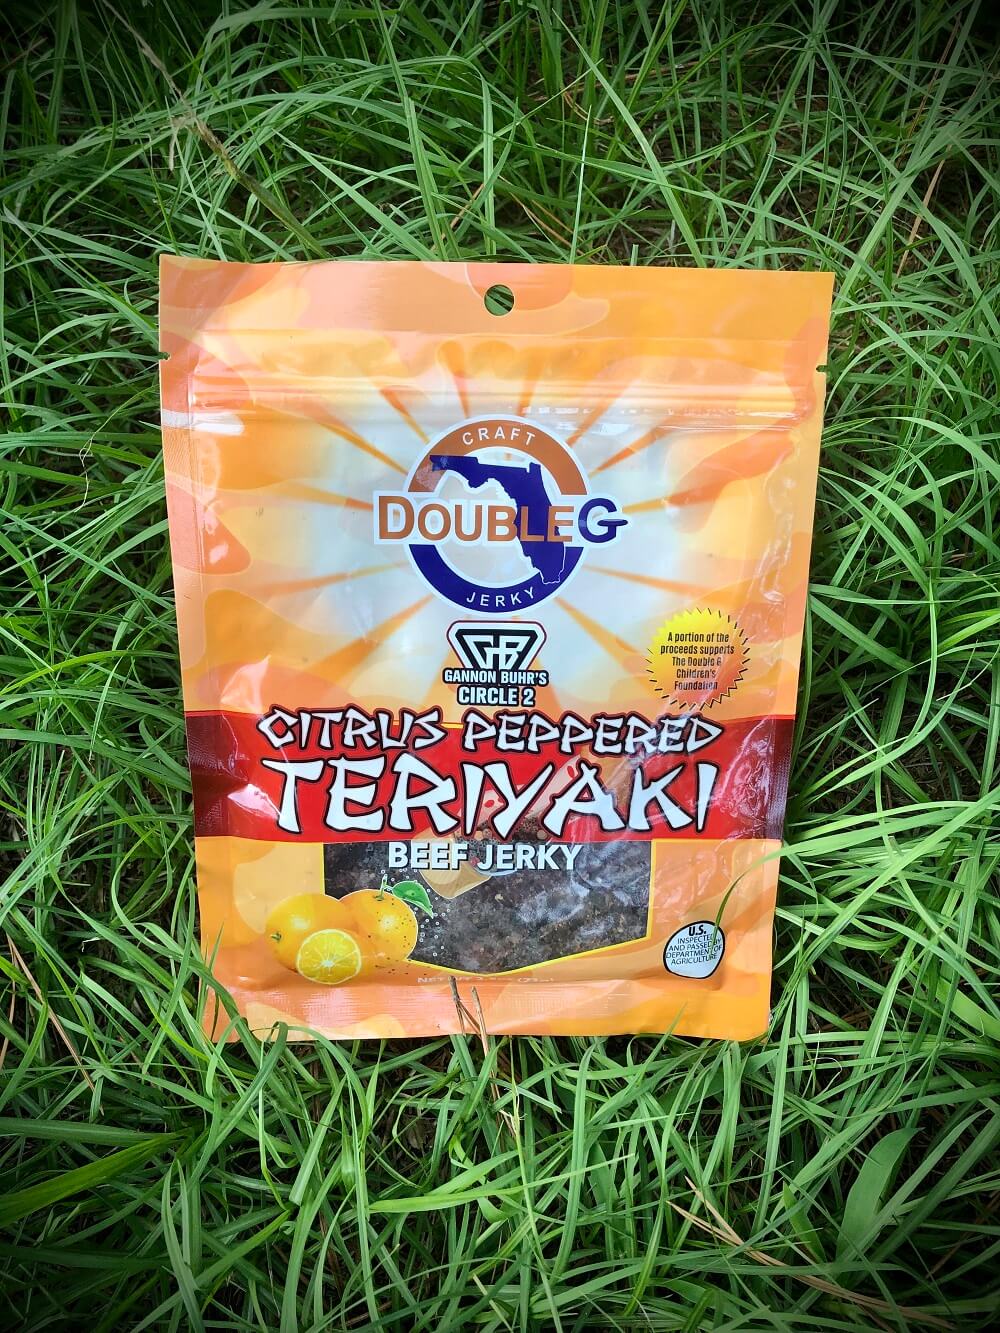 DoubleG Snacks - Trail Mix - 10 Ounce - DoubleG Craft Jerky